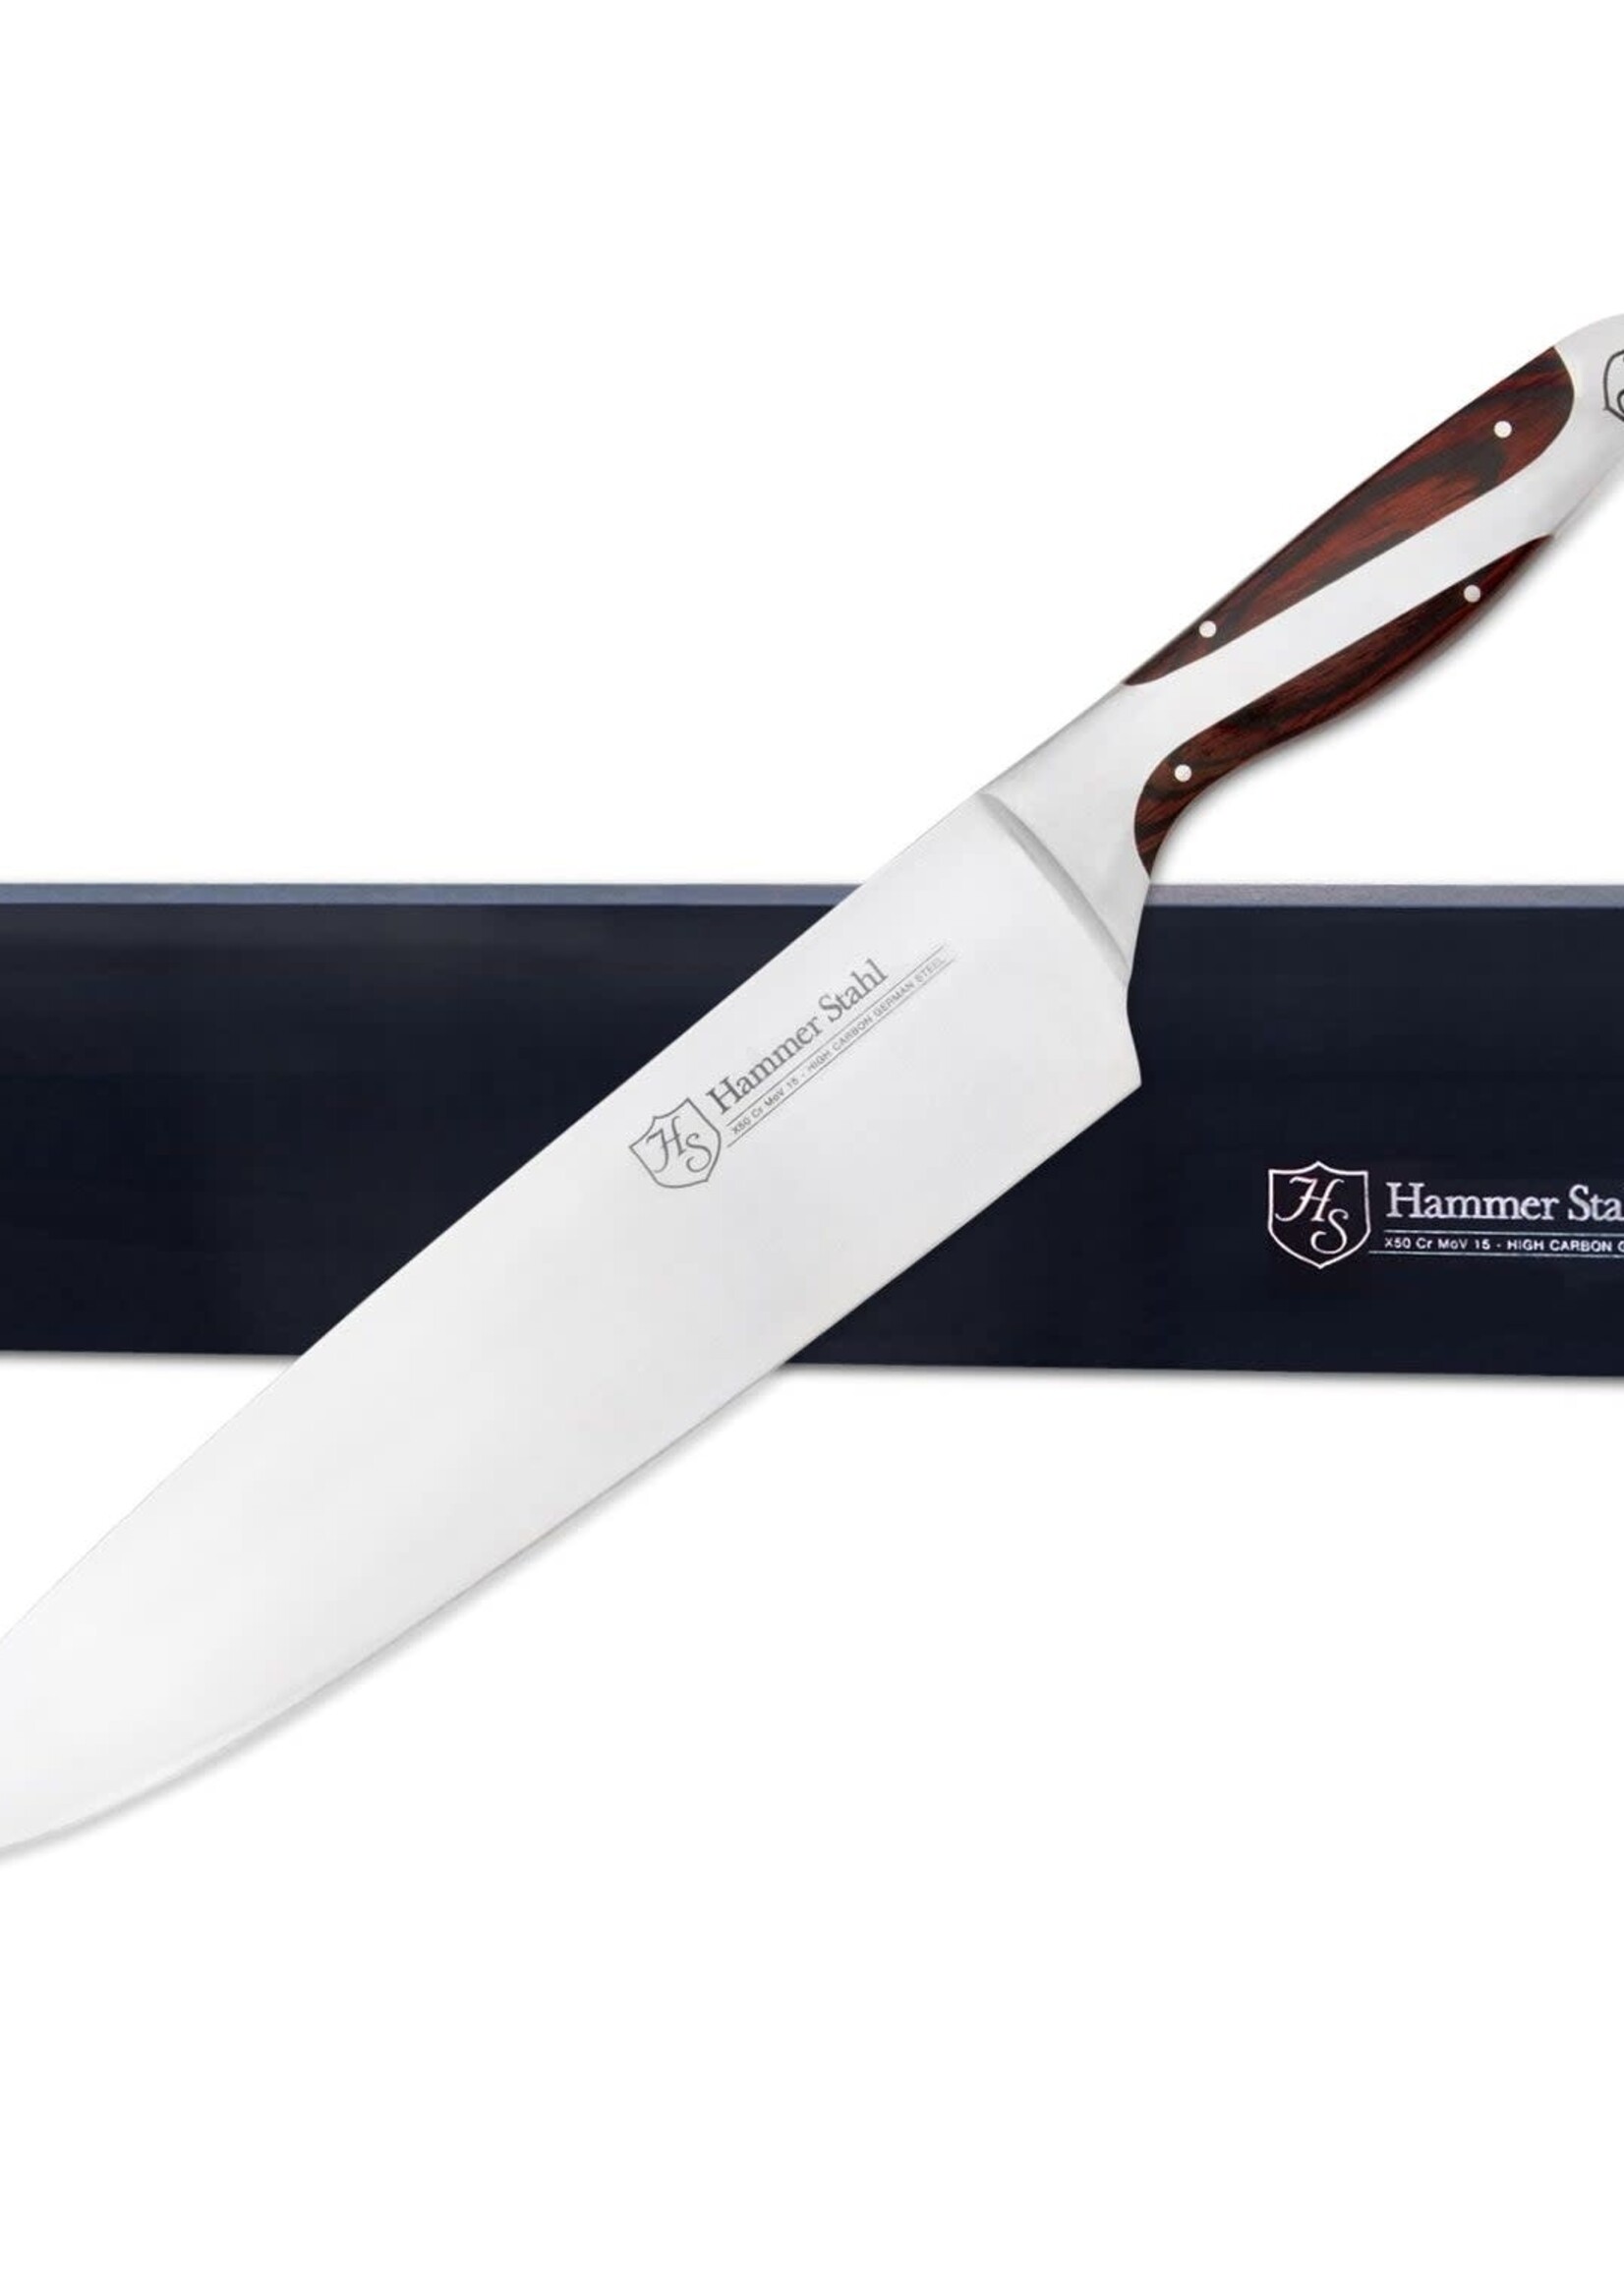 Hammerstahl Heritage Steel 10" Chef Knife